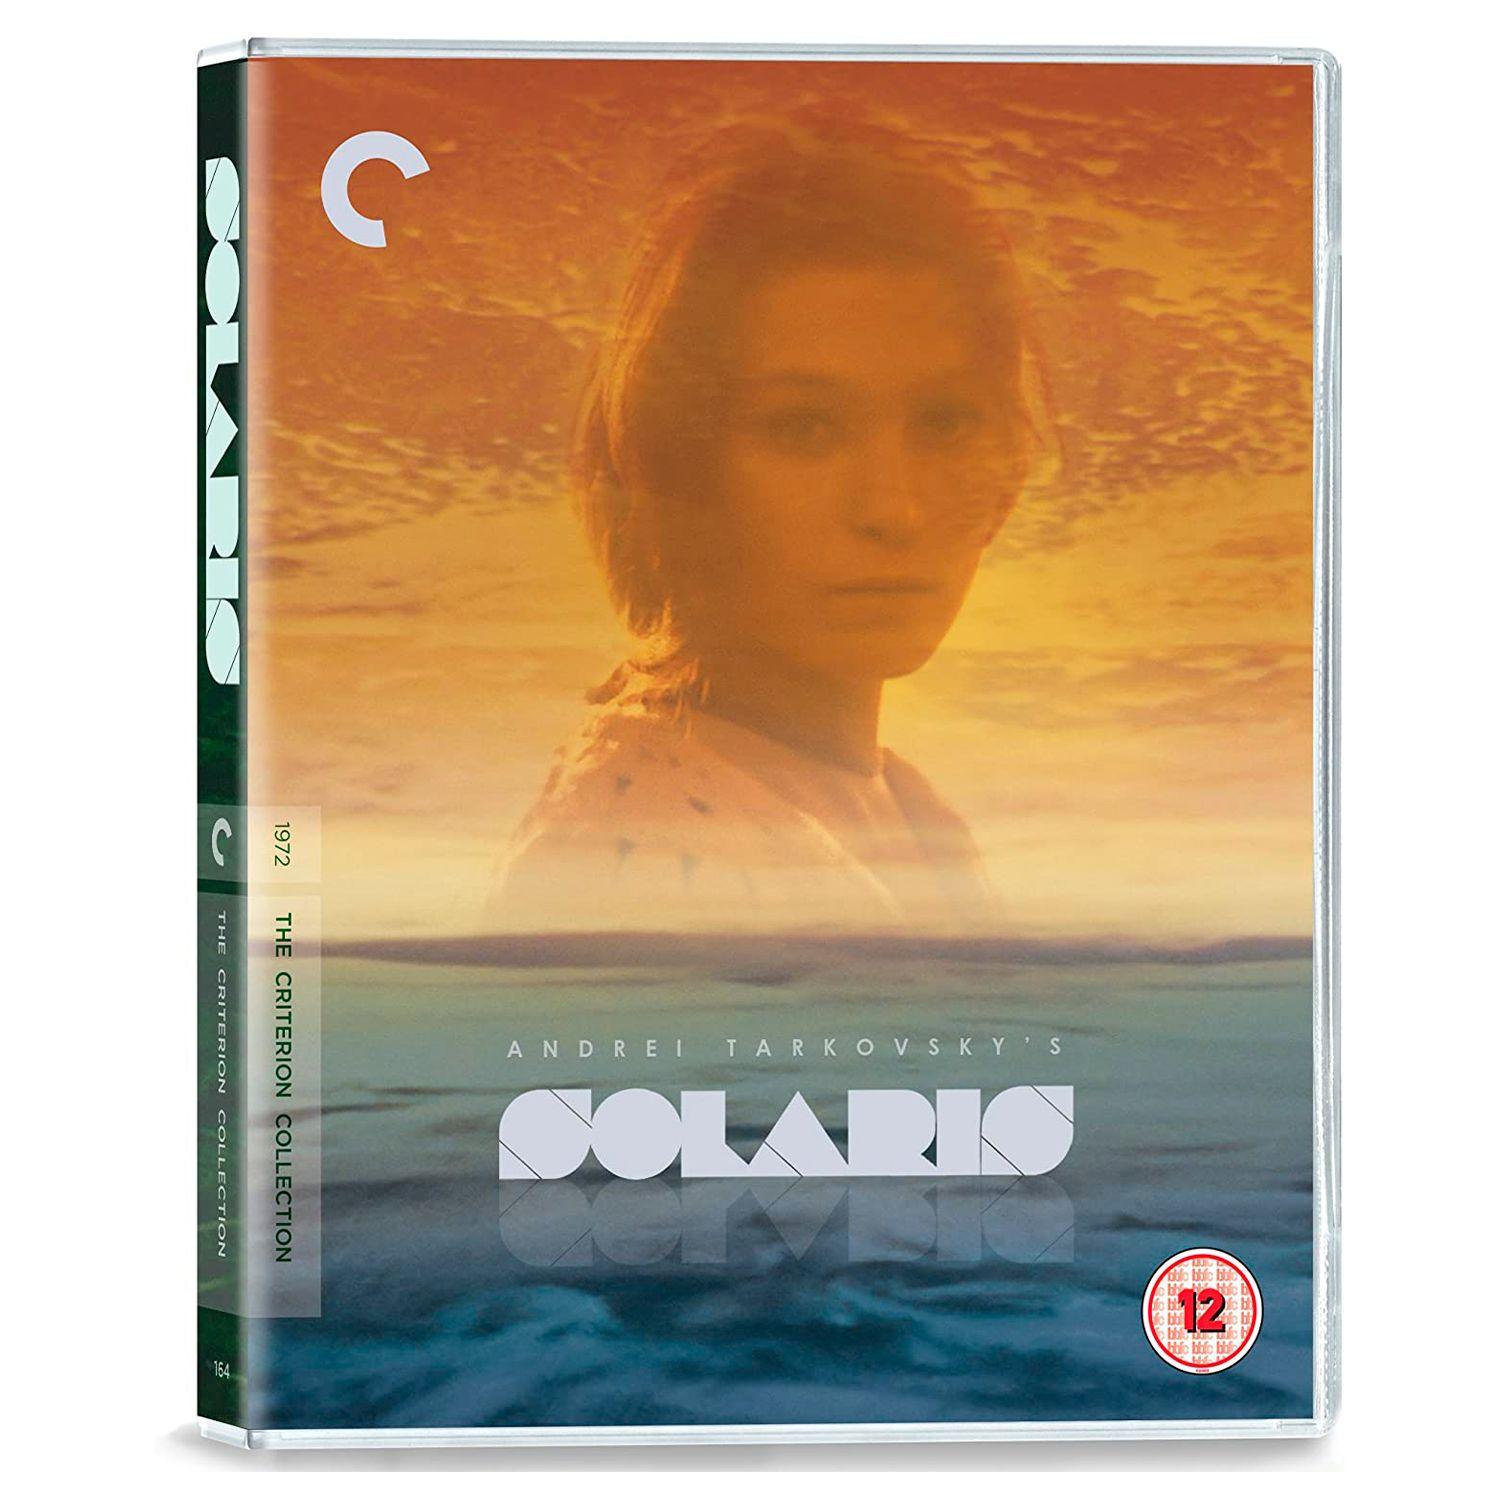 Солярис (Blu-ray) (Criterion)